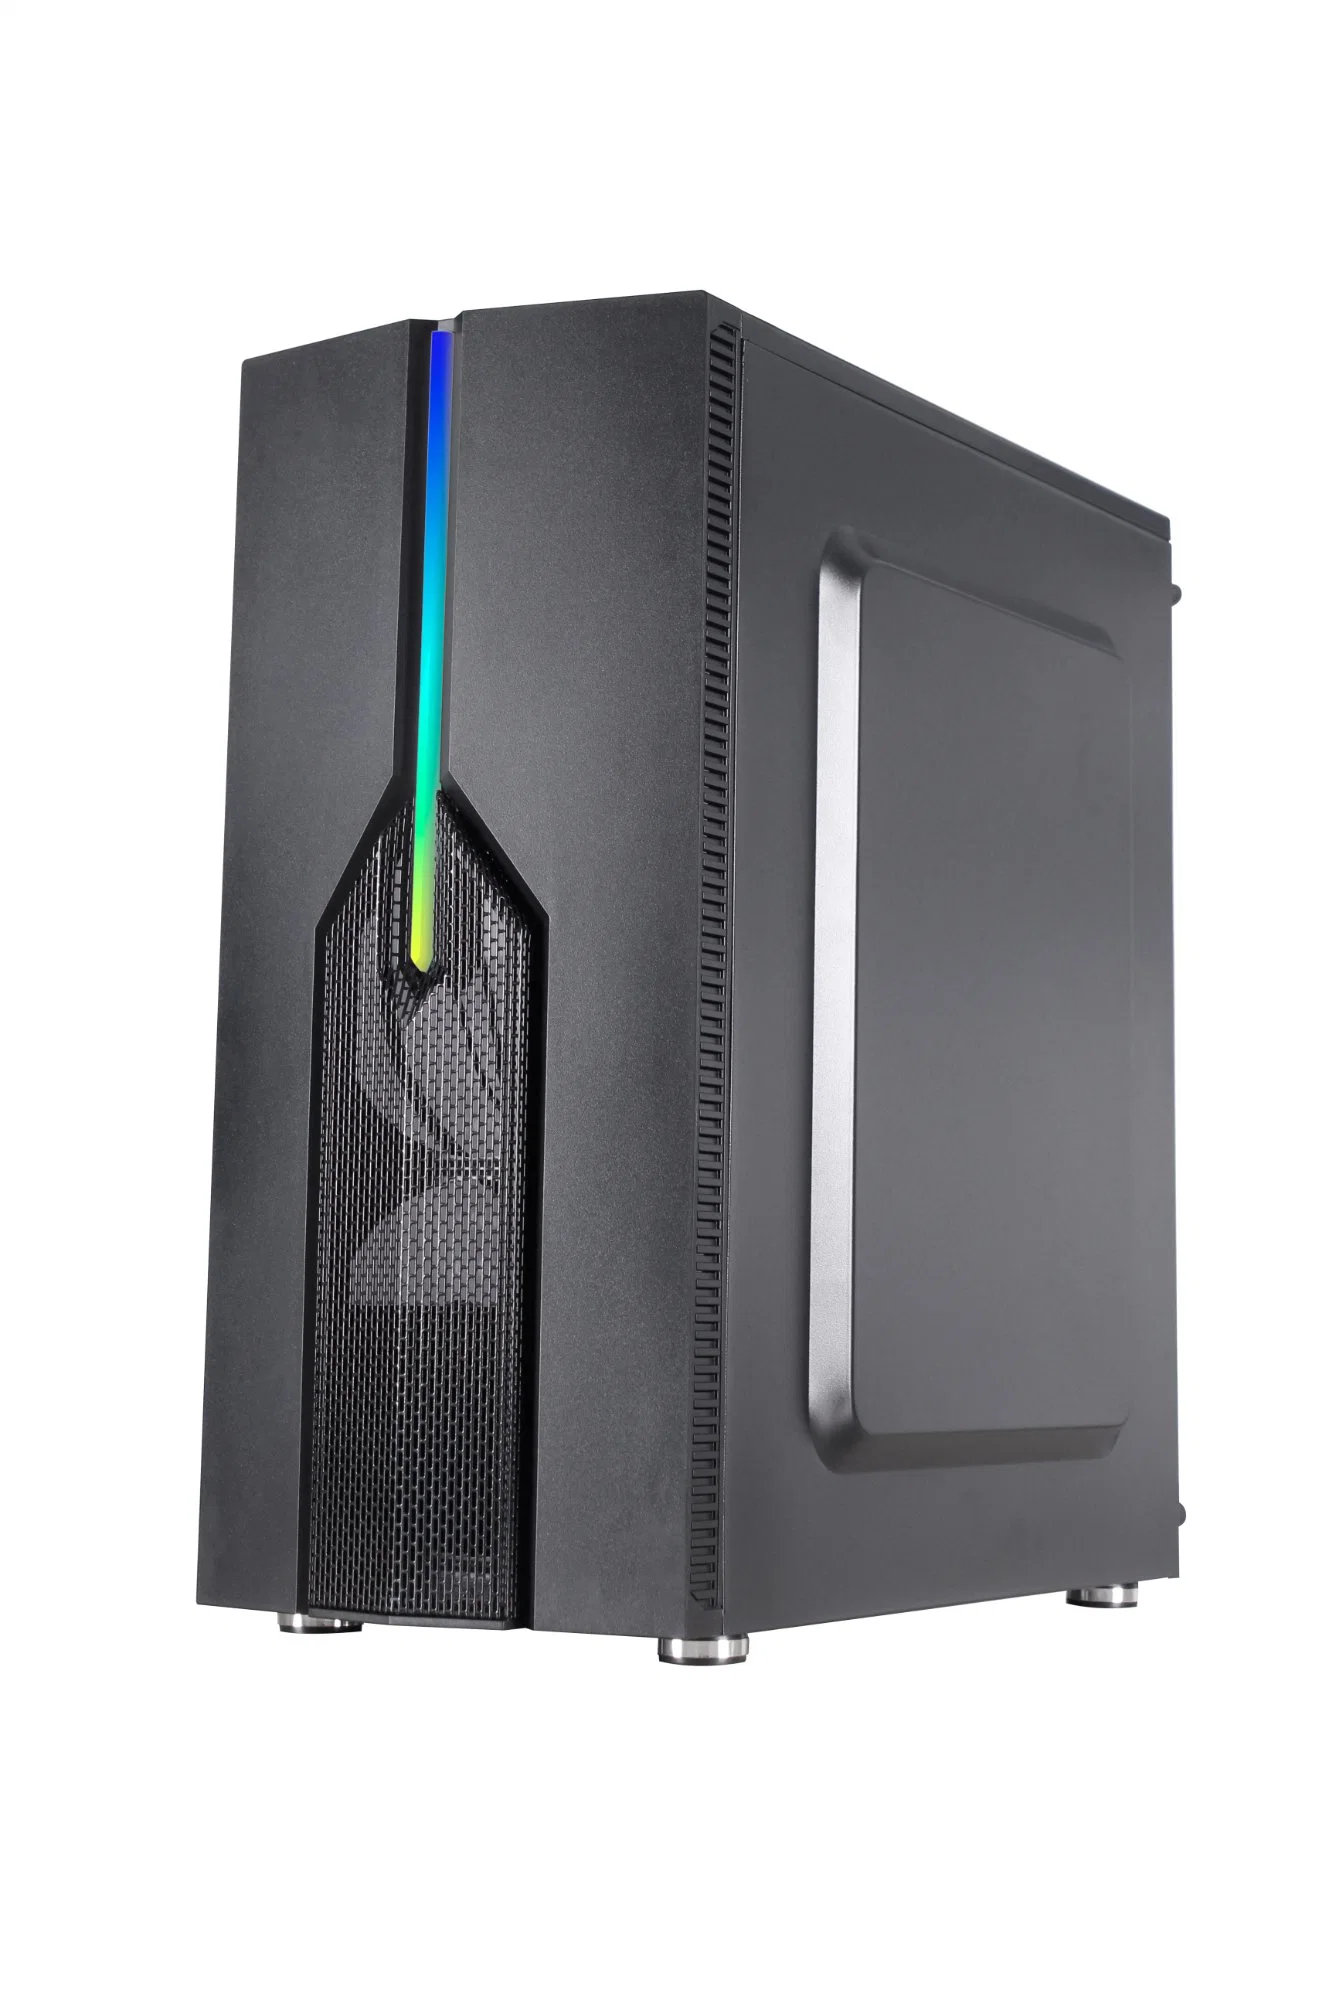 Hot Sale ATX Computer Part PC Desktop Computer Case with RGB Strip Design